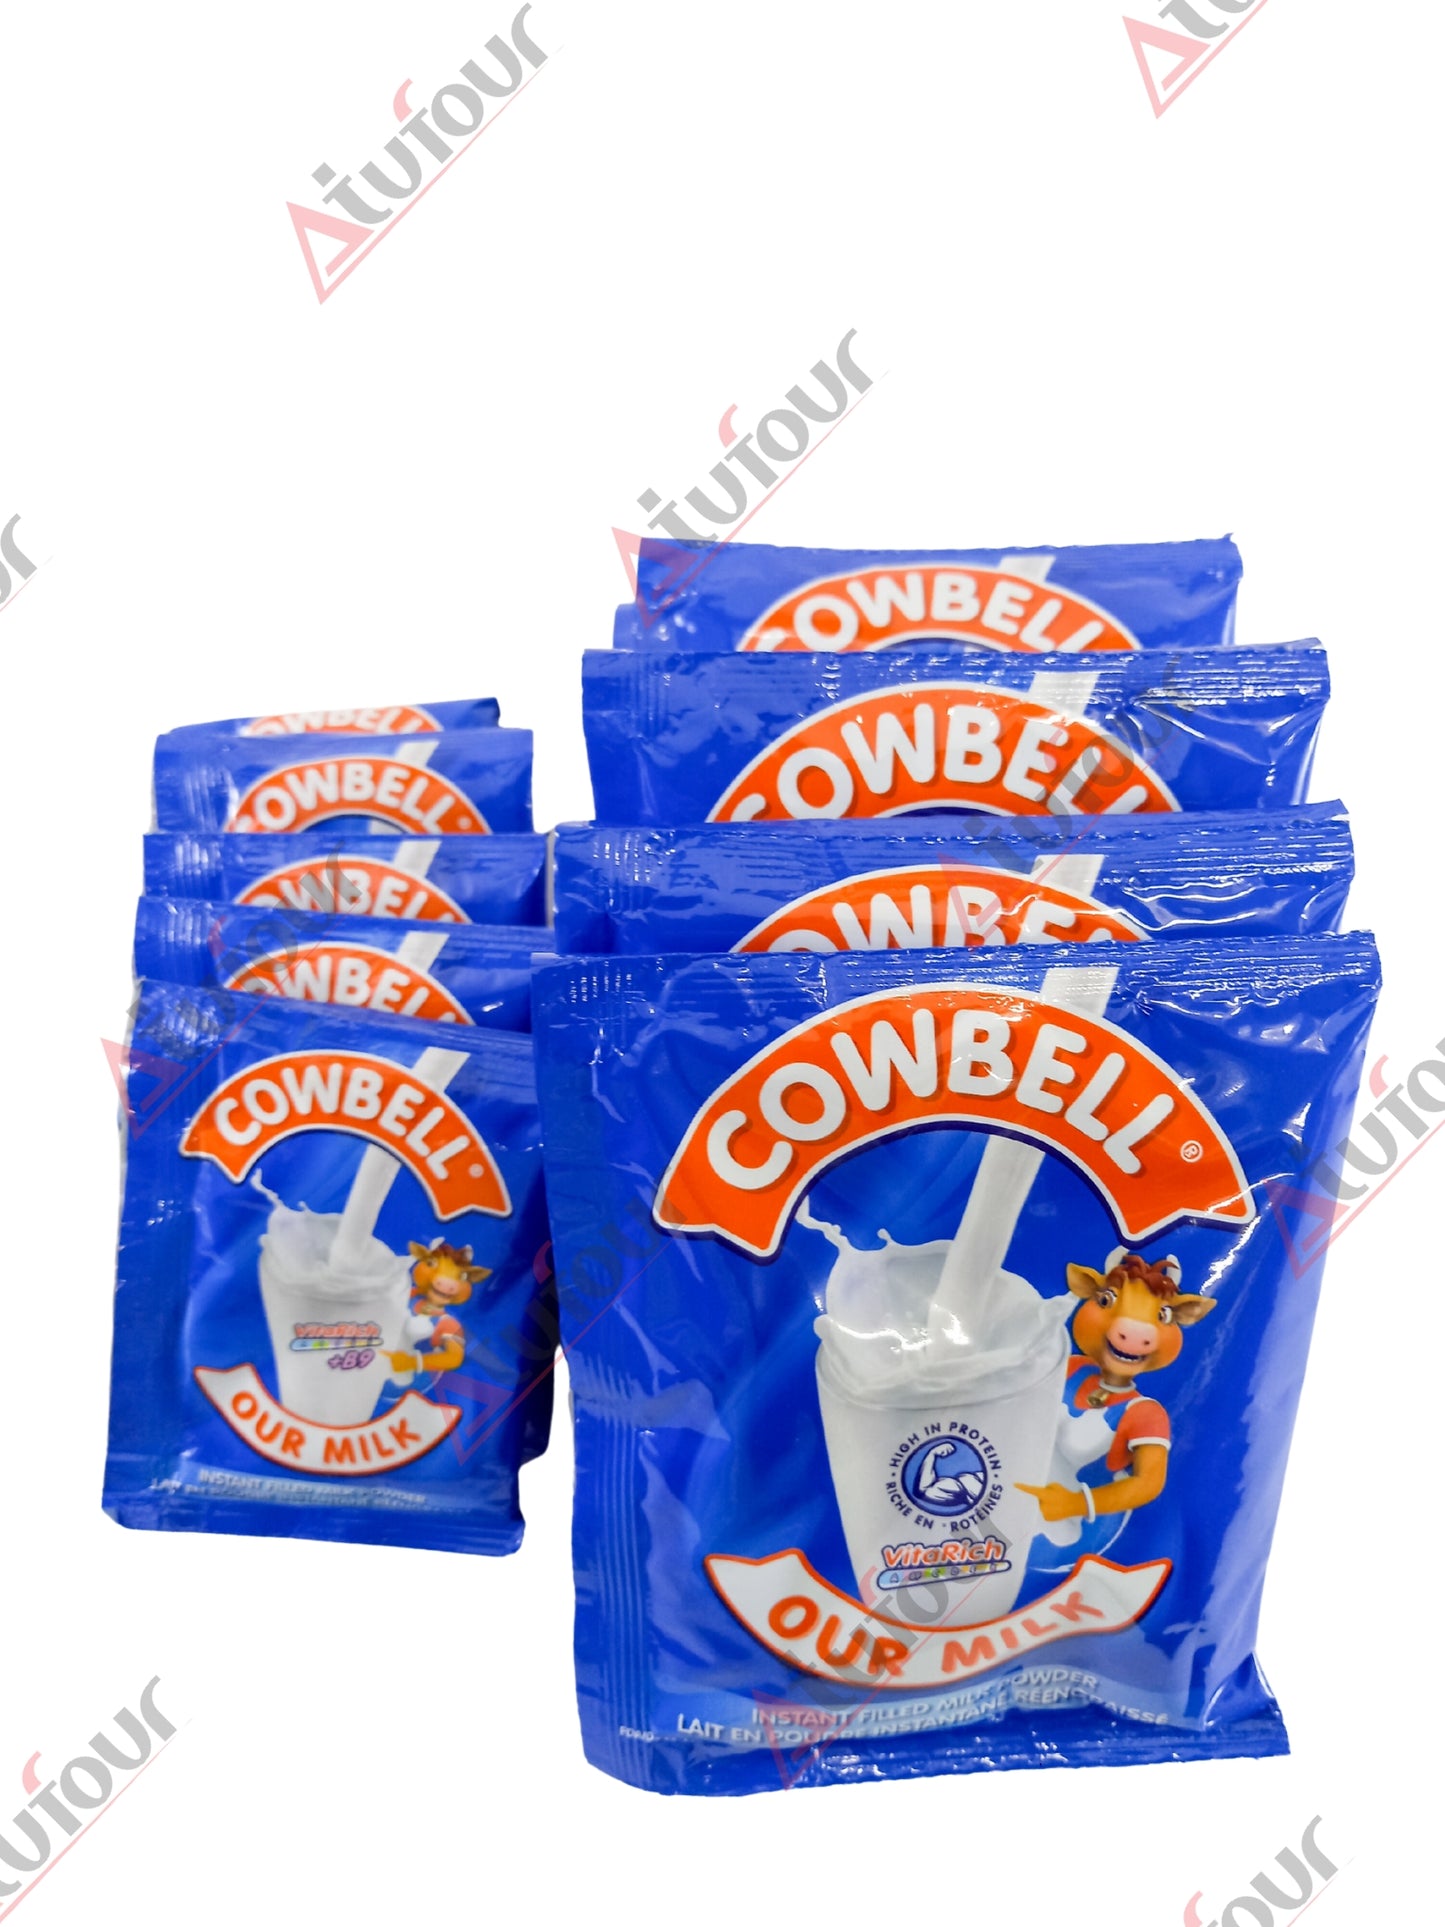 Cowbell Milk Powder Sachet 23g